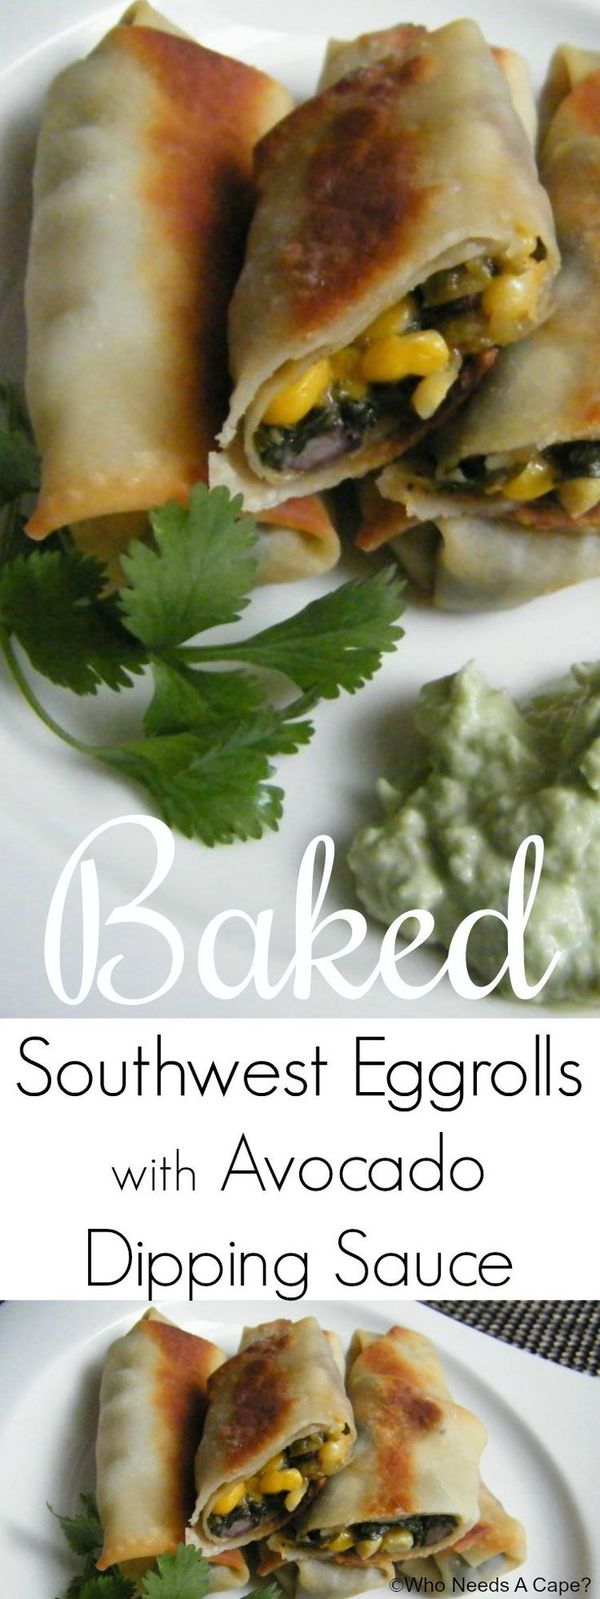 Baked Southwest Eggrolls